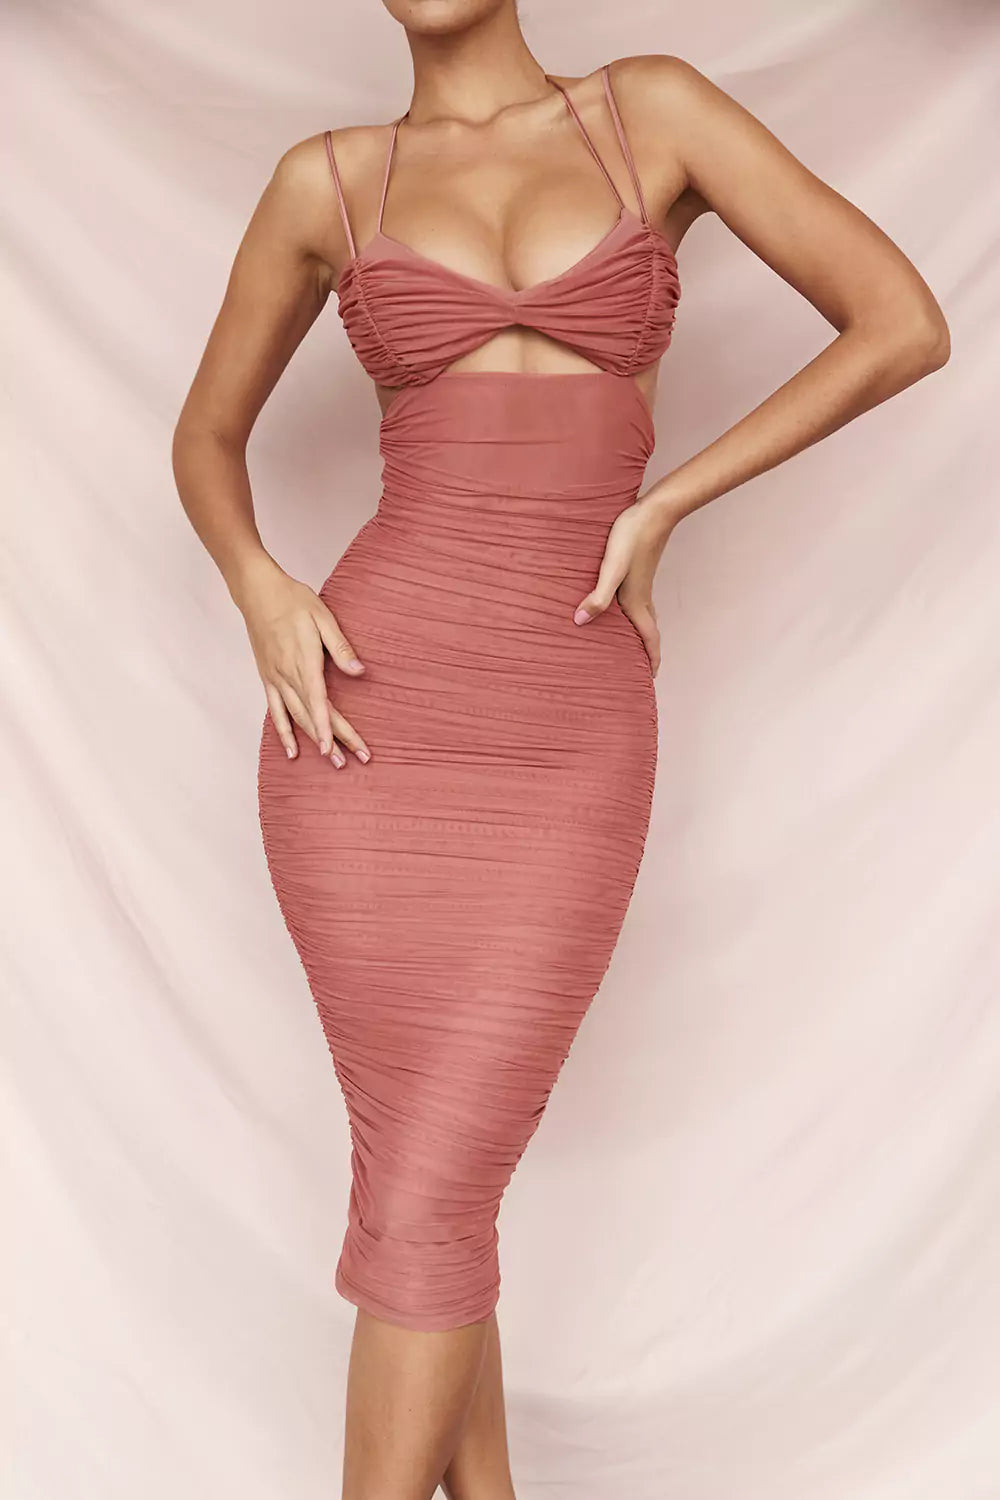 The model is wearing a pink bandage midi dress.